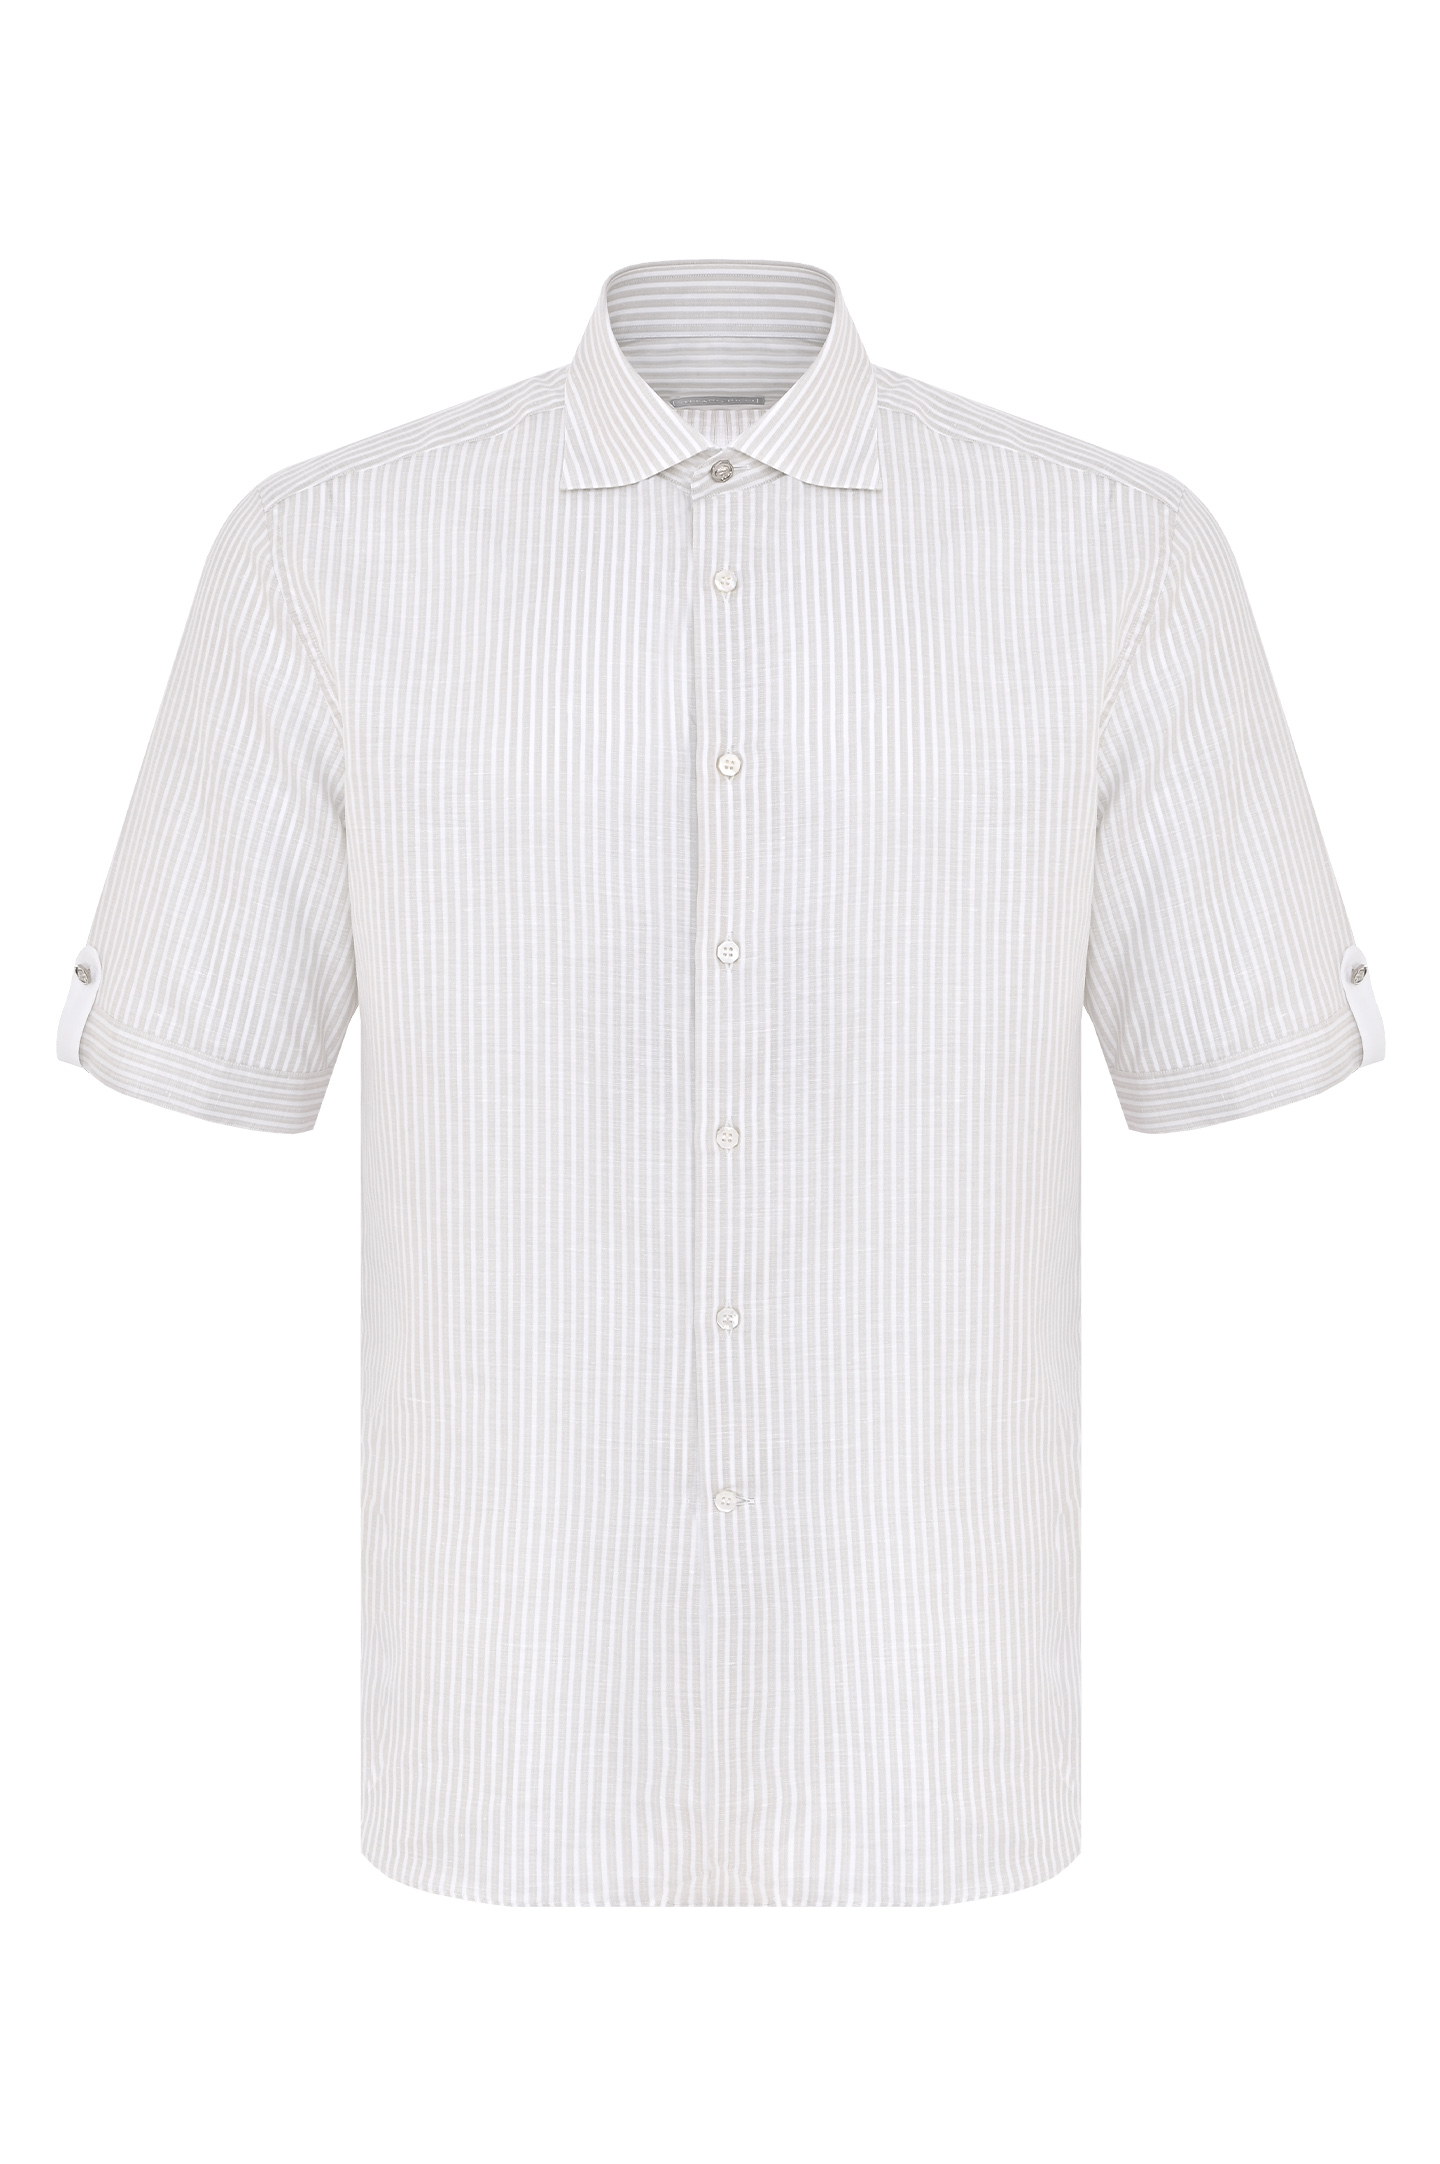 Рубашка STEFANO RICCI MC006729 R1259, цвет: Белый, Мужской